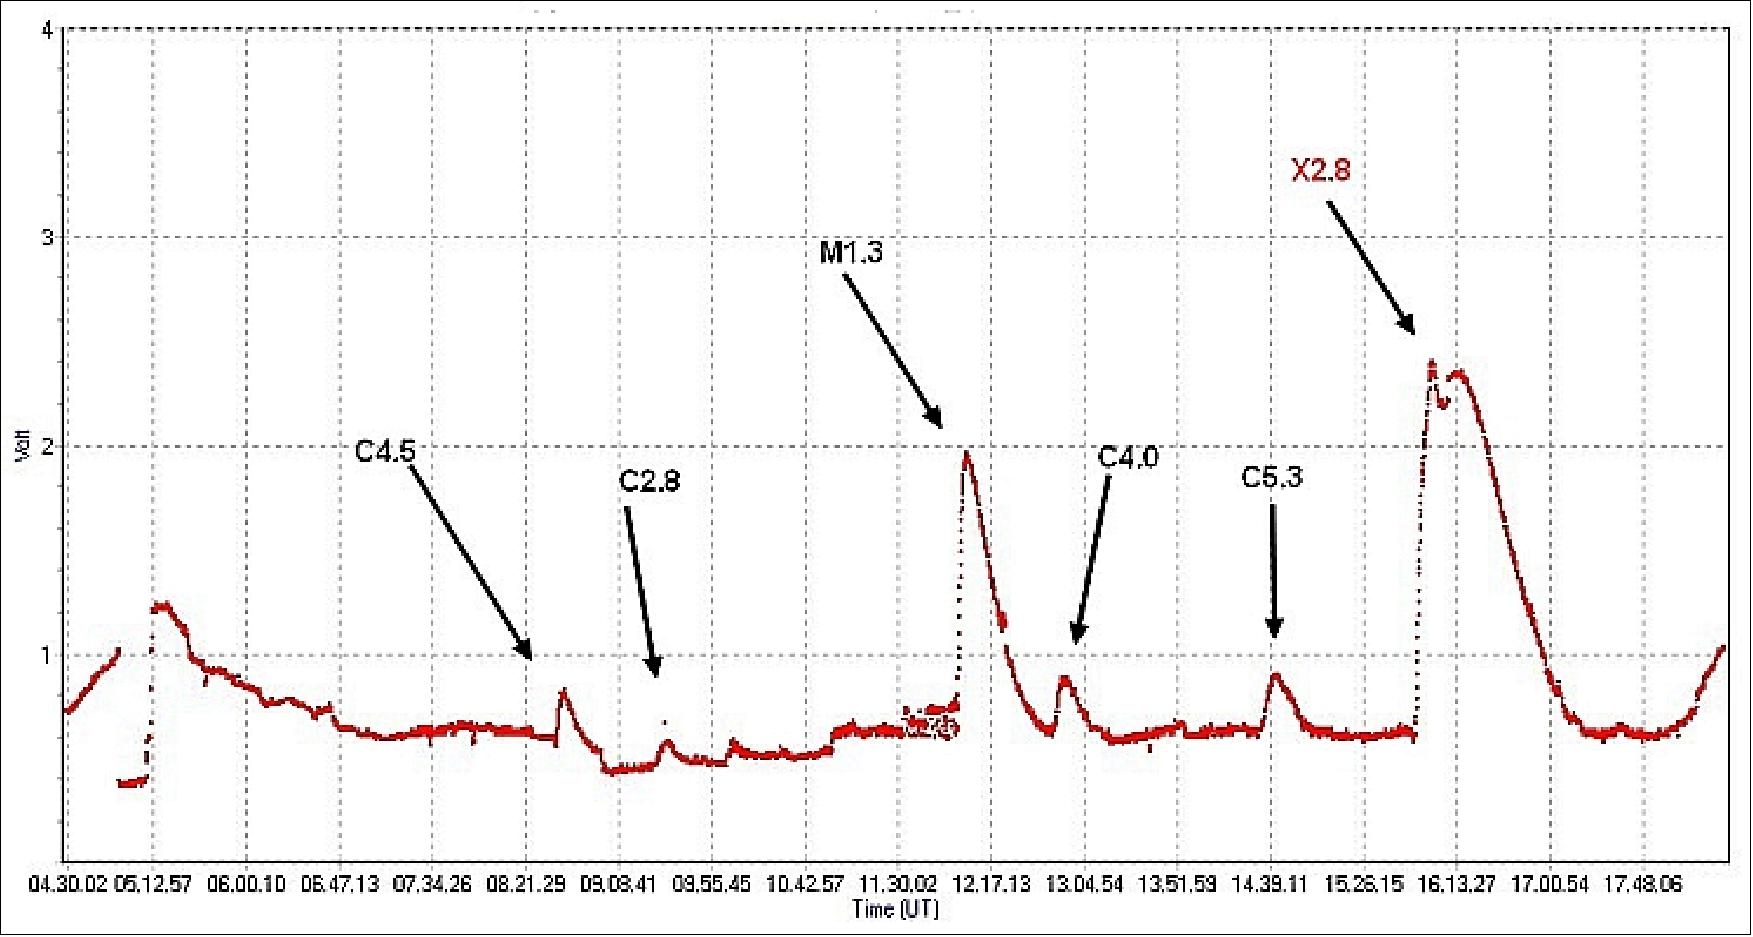 Figure 31: SID (Sudden Ionospheric Disturbance) events on May 13, 2013 (station 21.75 kHz), image credit: Roberto Battaiola, Pantigliate, Milan, Italy (Ref. 37)